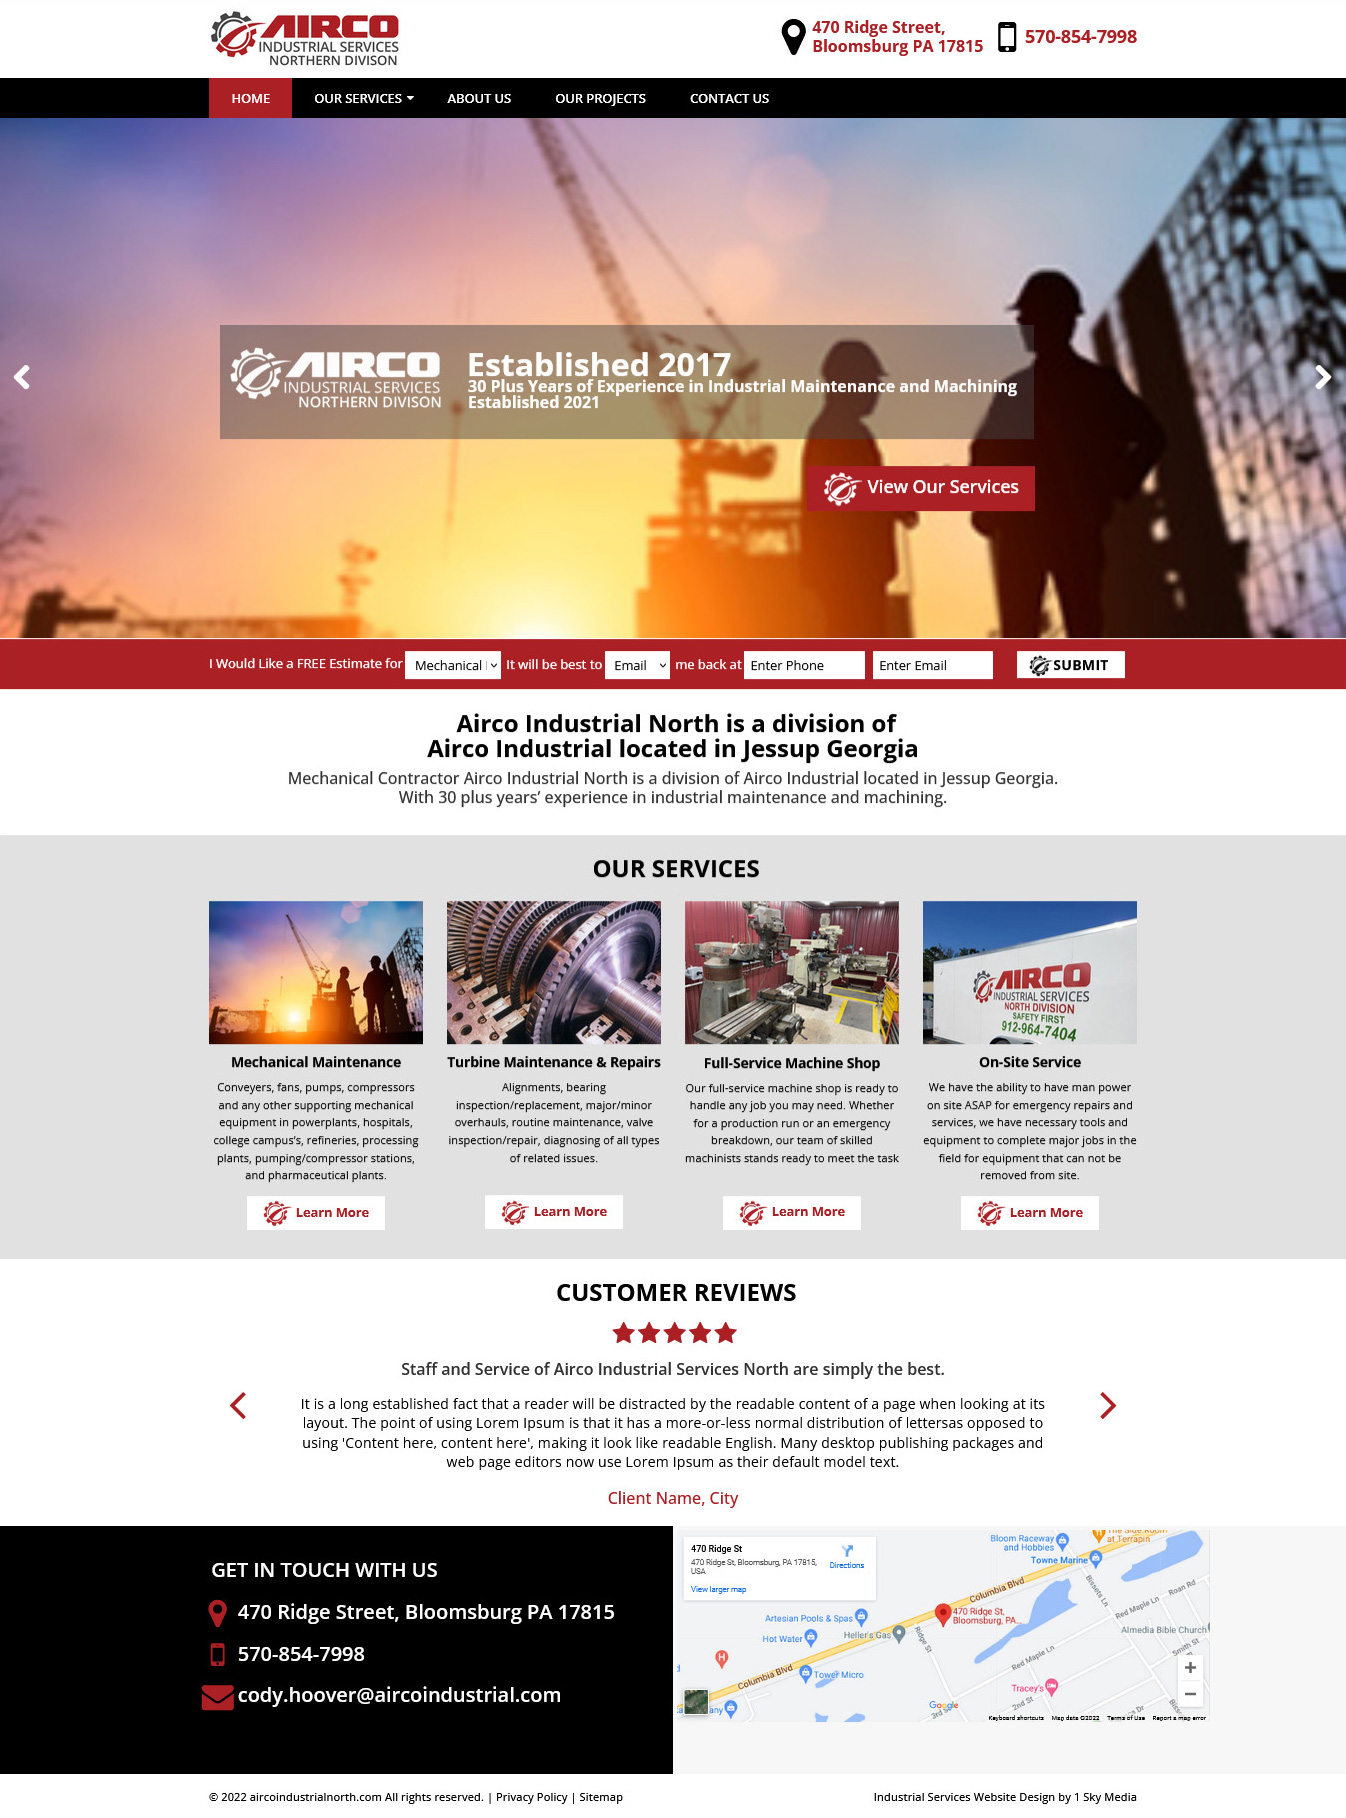 Airco Industrial Services North Divison Website Design